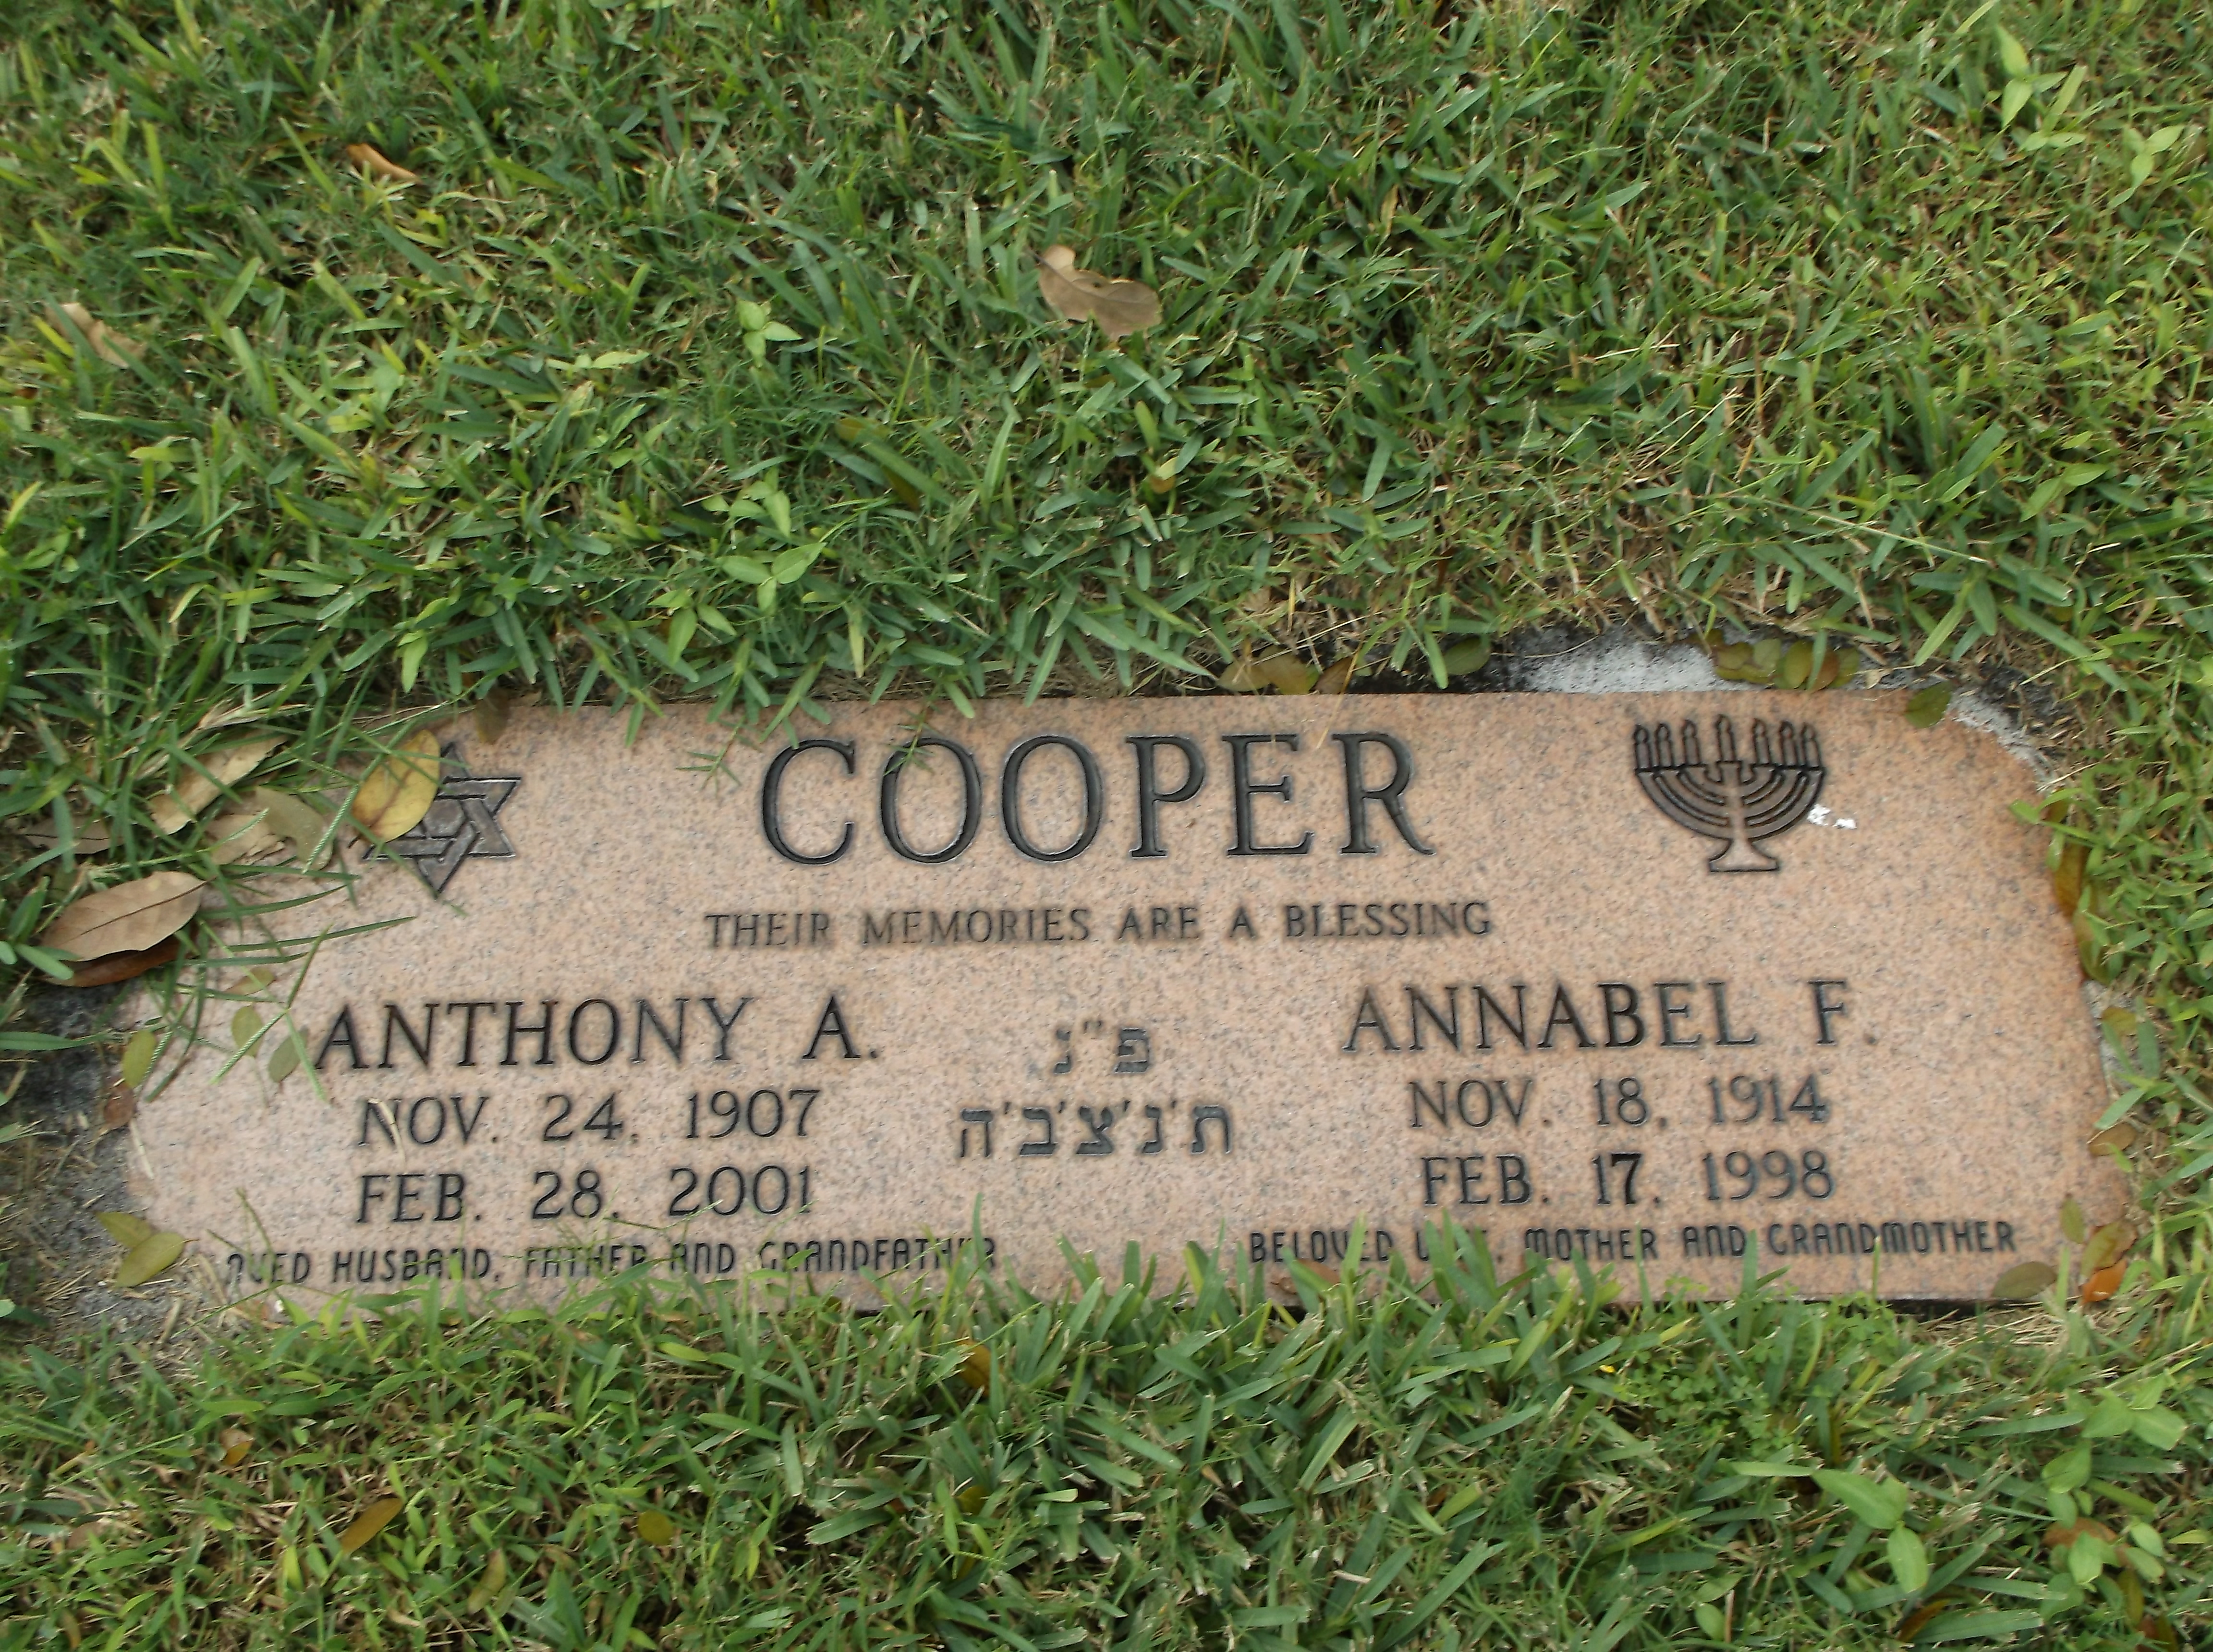 Annabel F Cooper